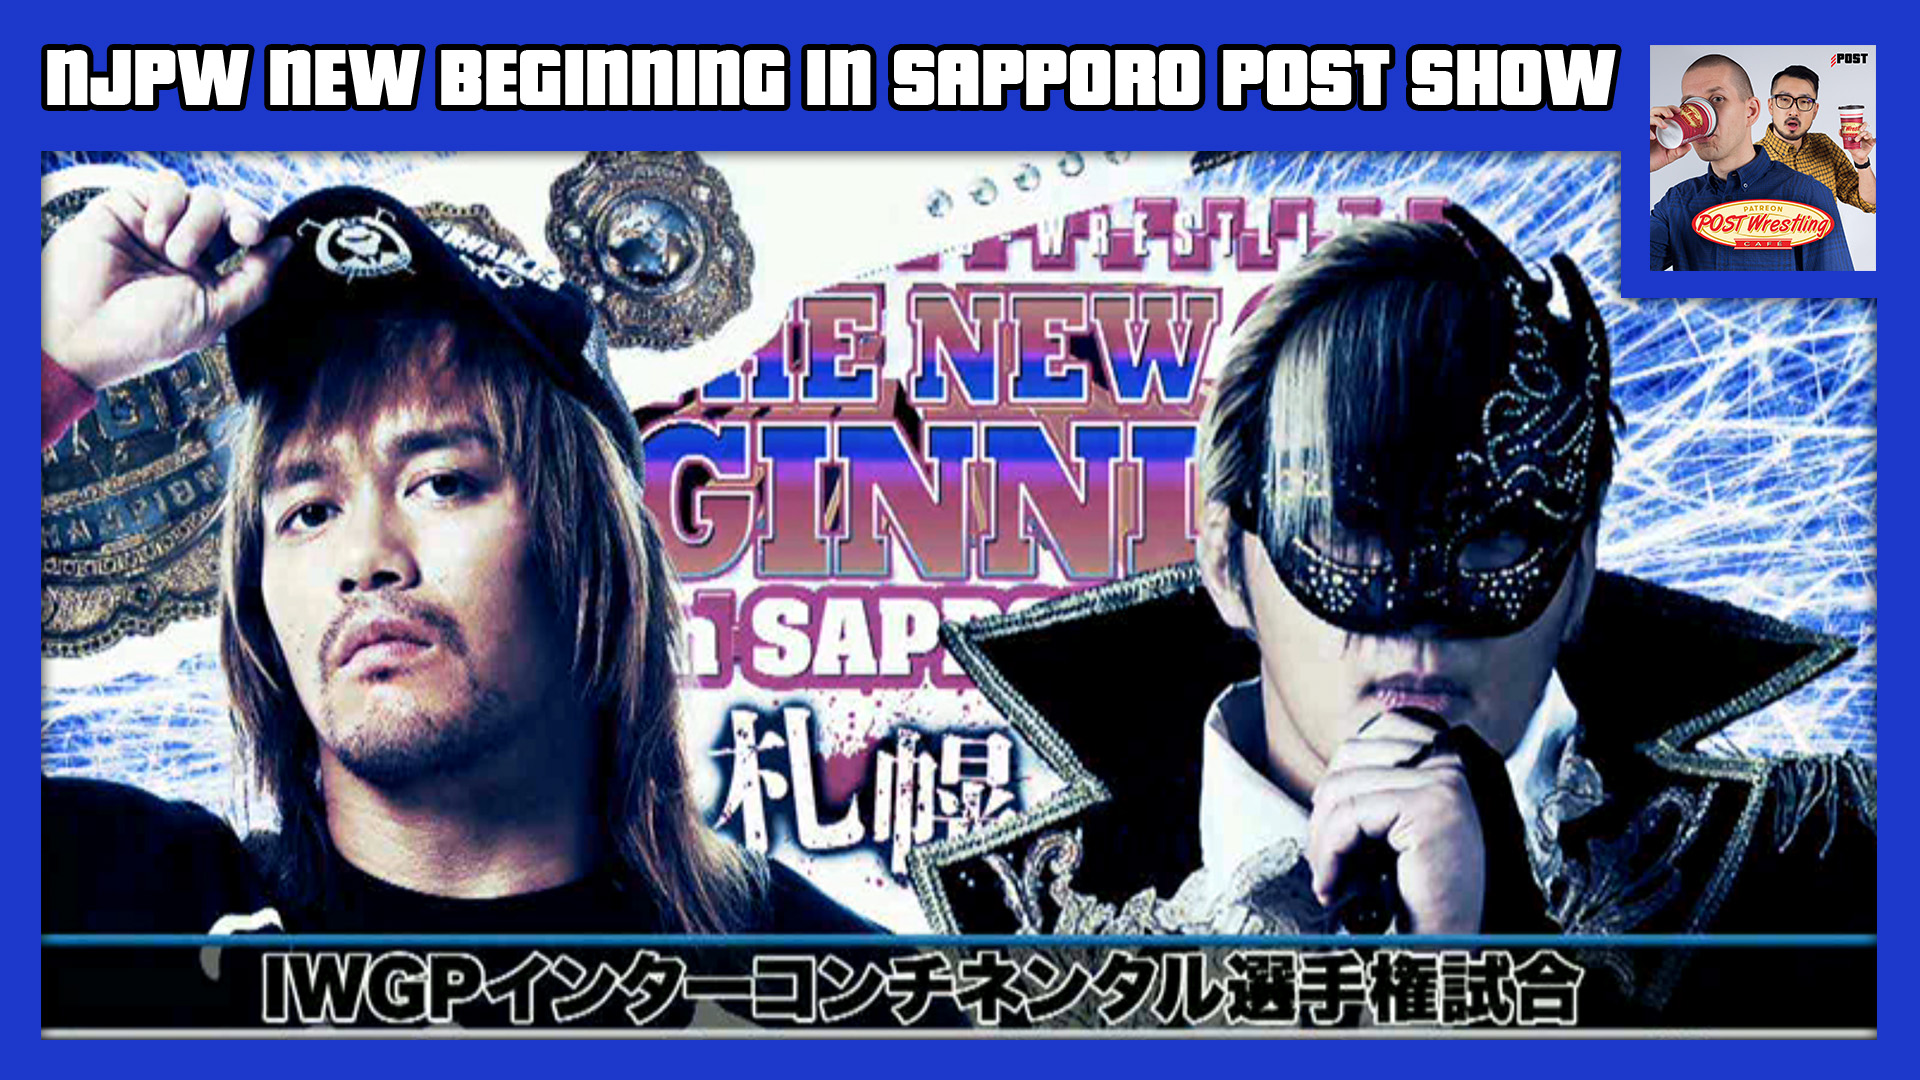 NJPW New Beginning in Sapporo 2019 POST Show POST Wrestling WWE AEW